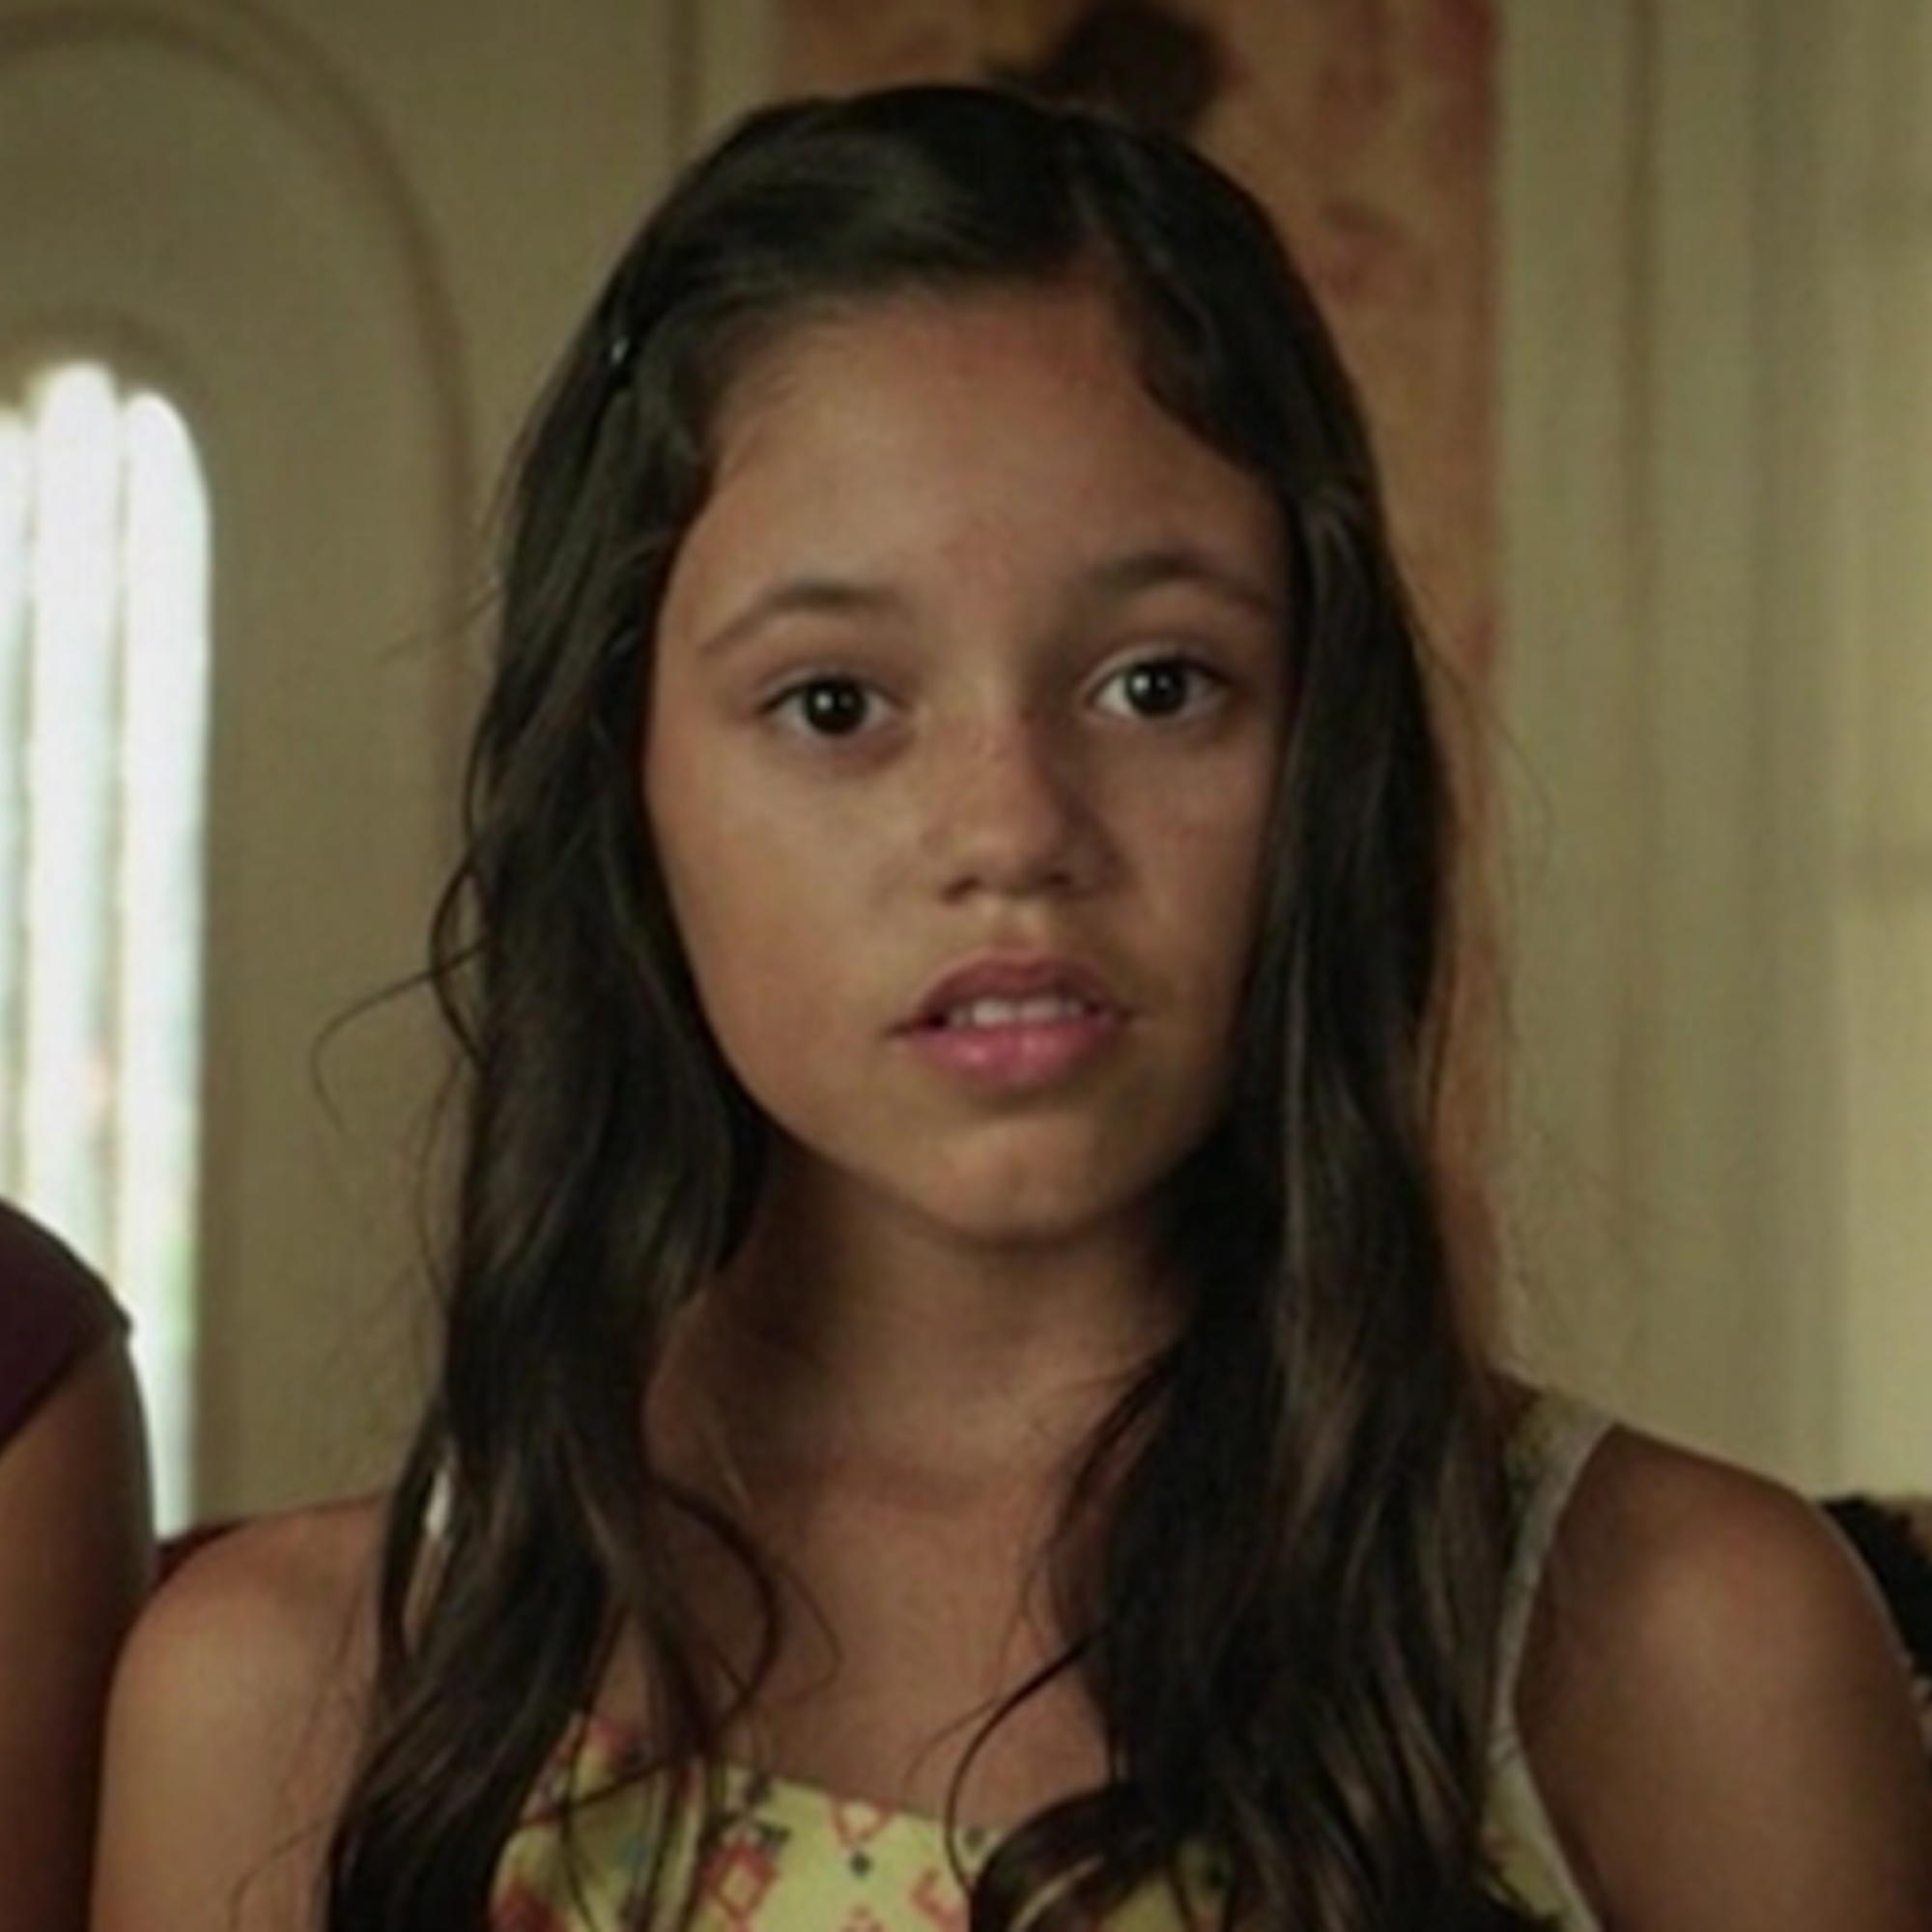 Jenna Ortega as young Jane in "Jane the Virgin".